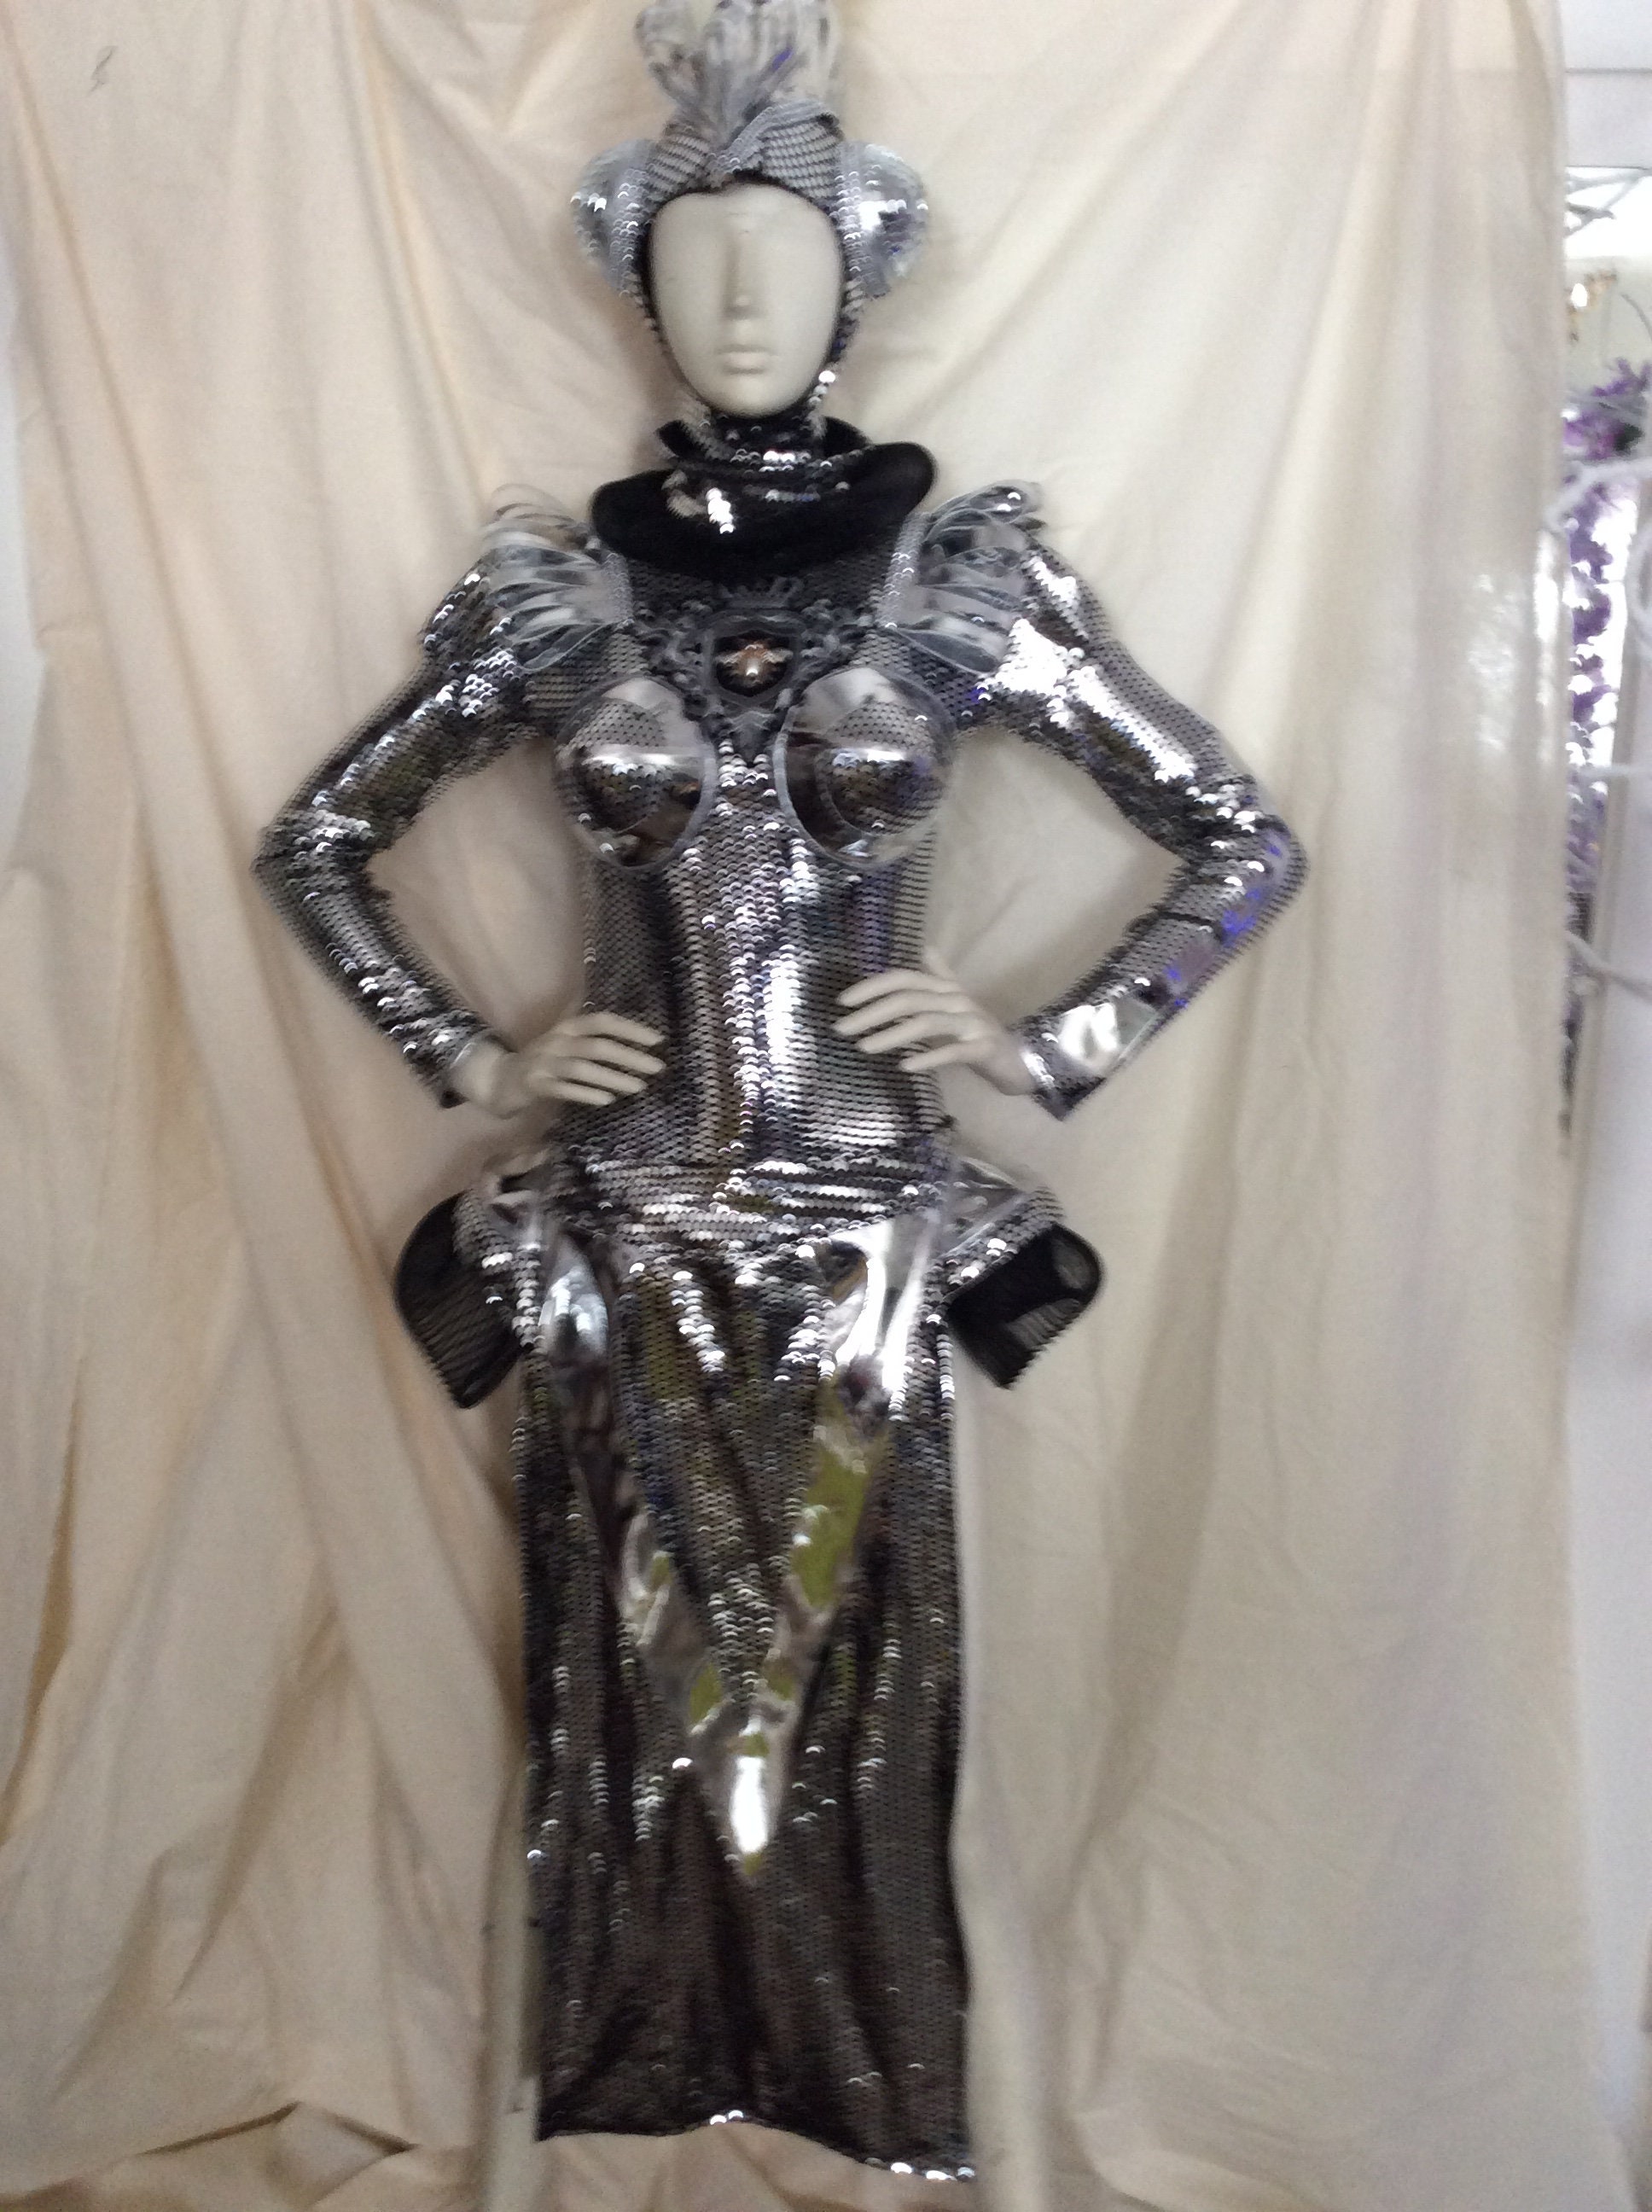 Futuristic Costume for Women. The coolest